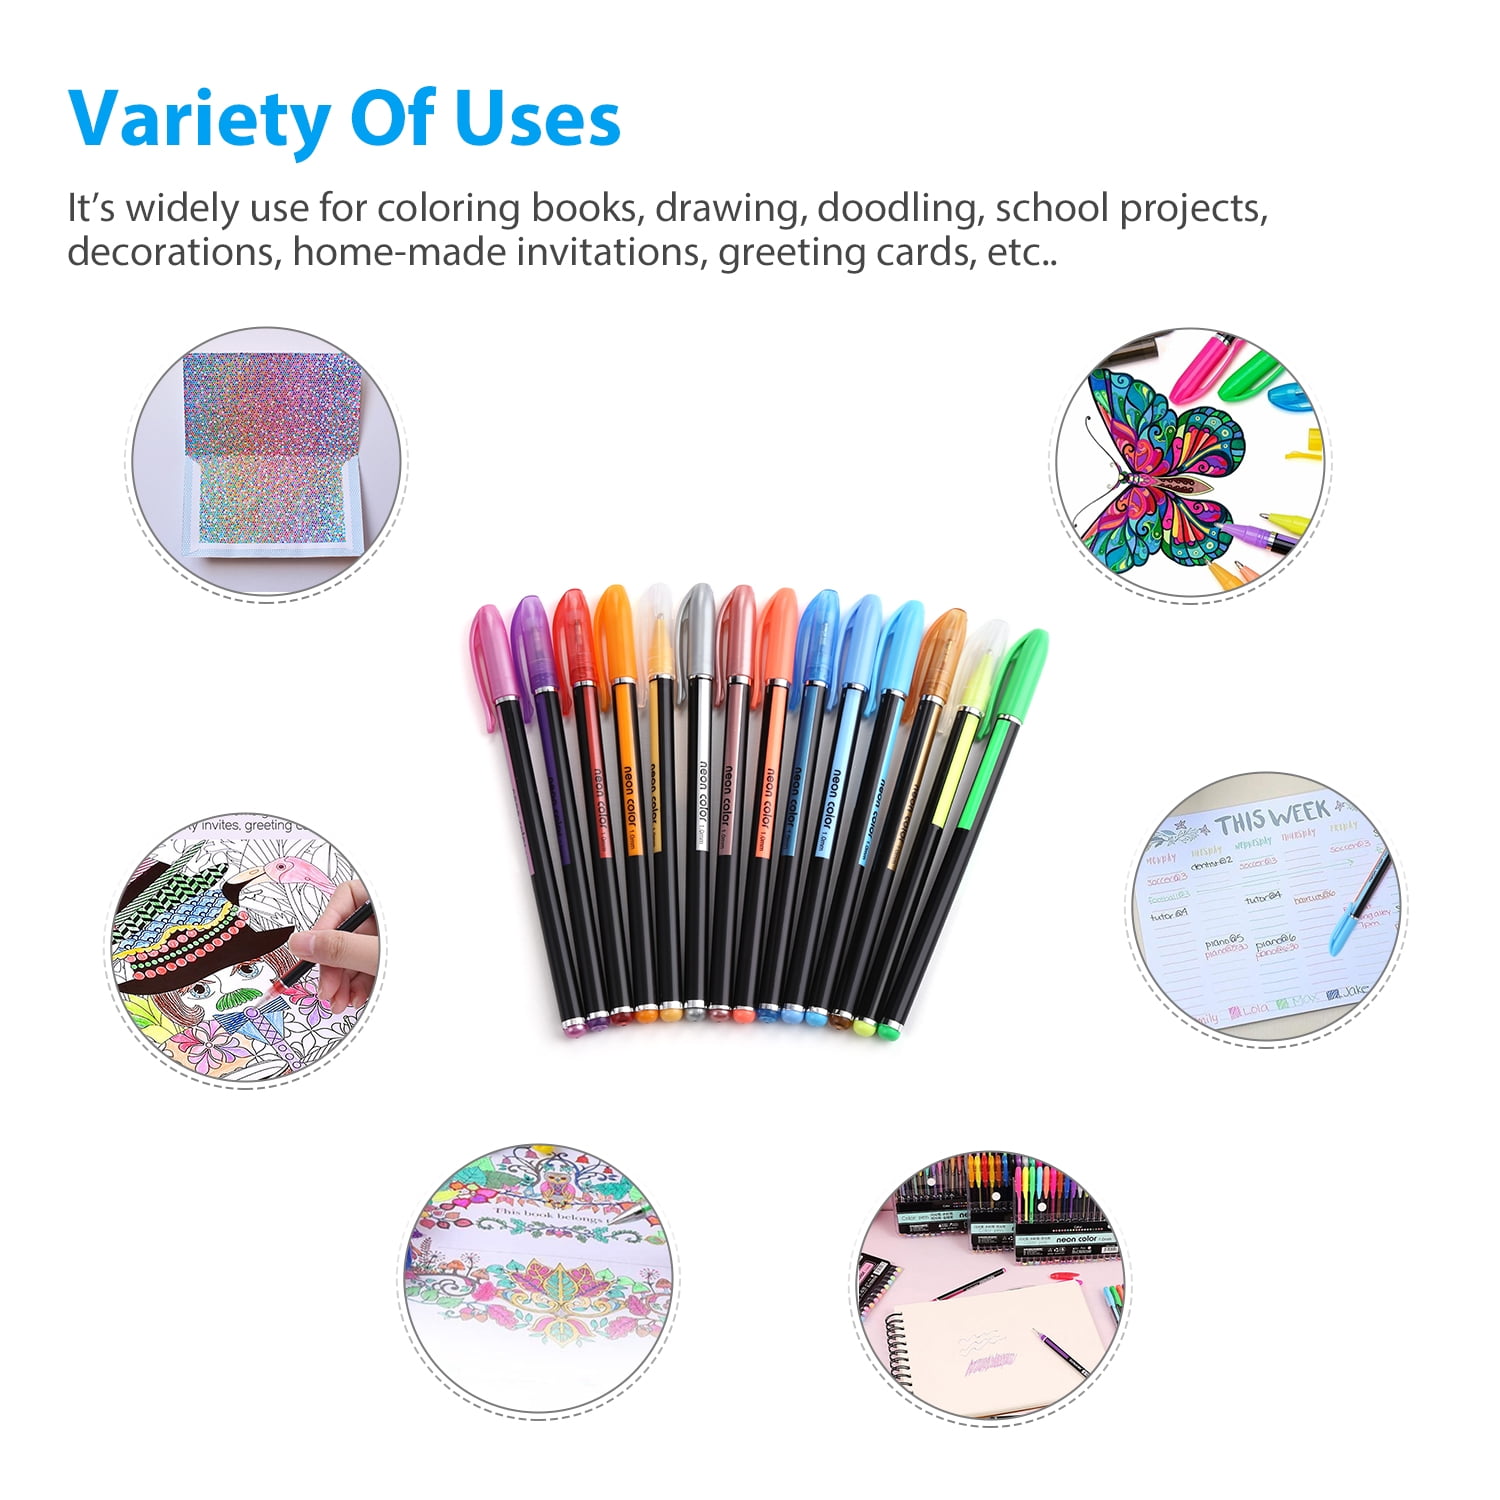 New ColorIt 48 Glitter Gel Pens Set